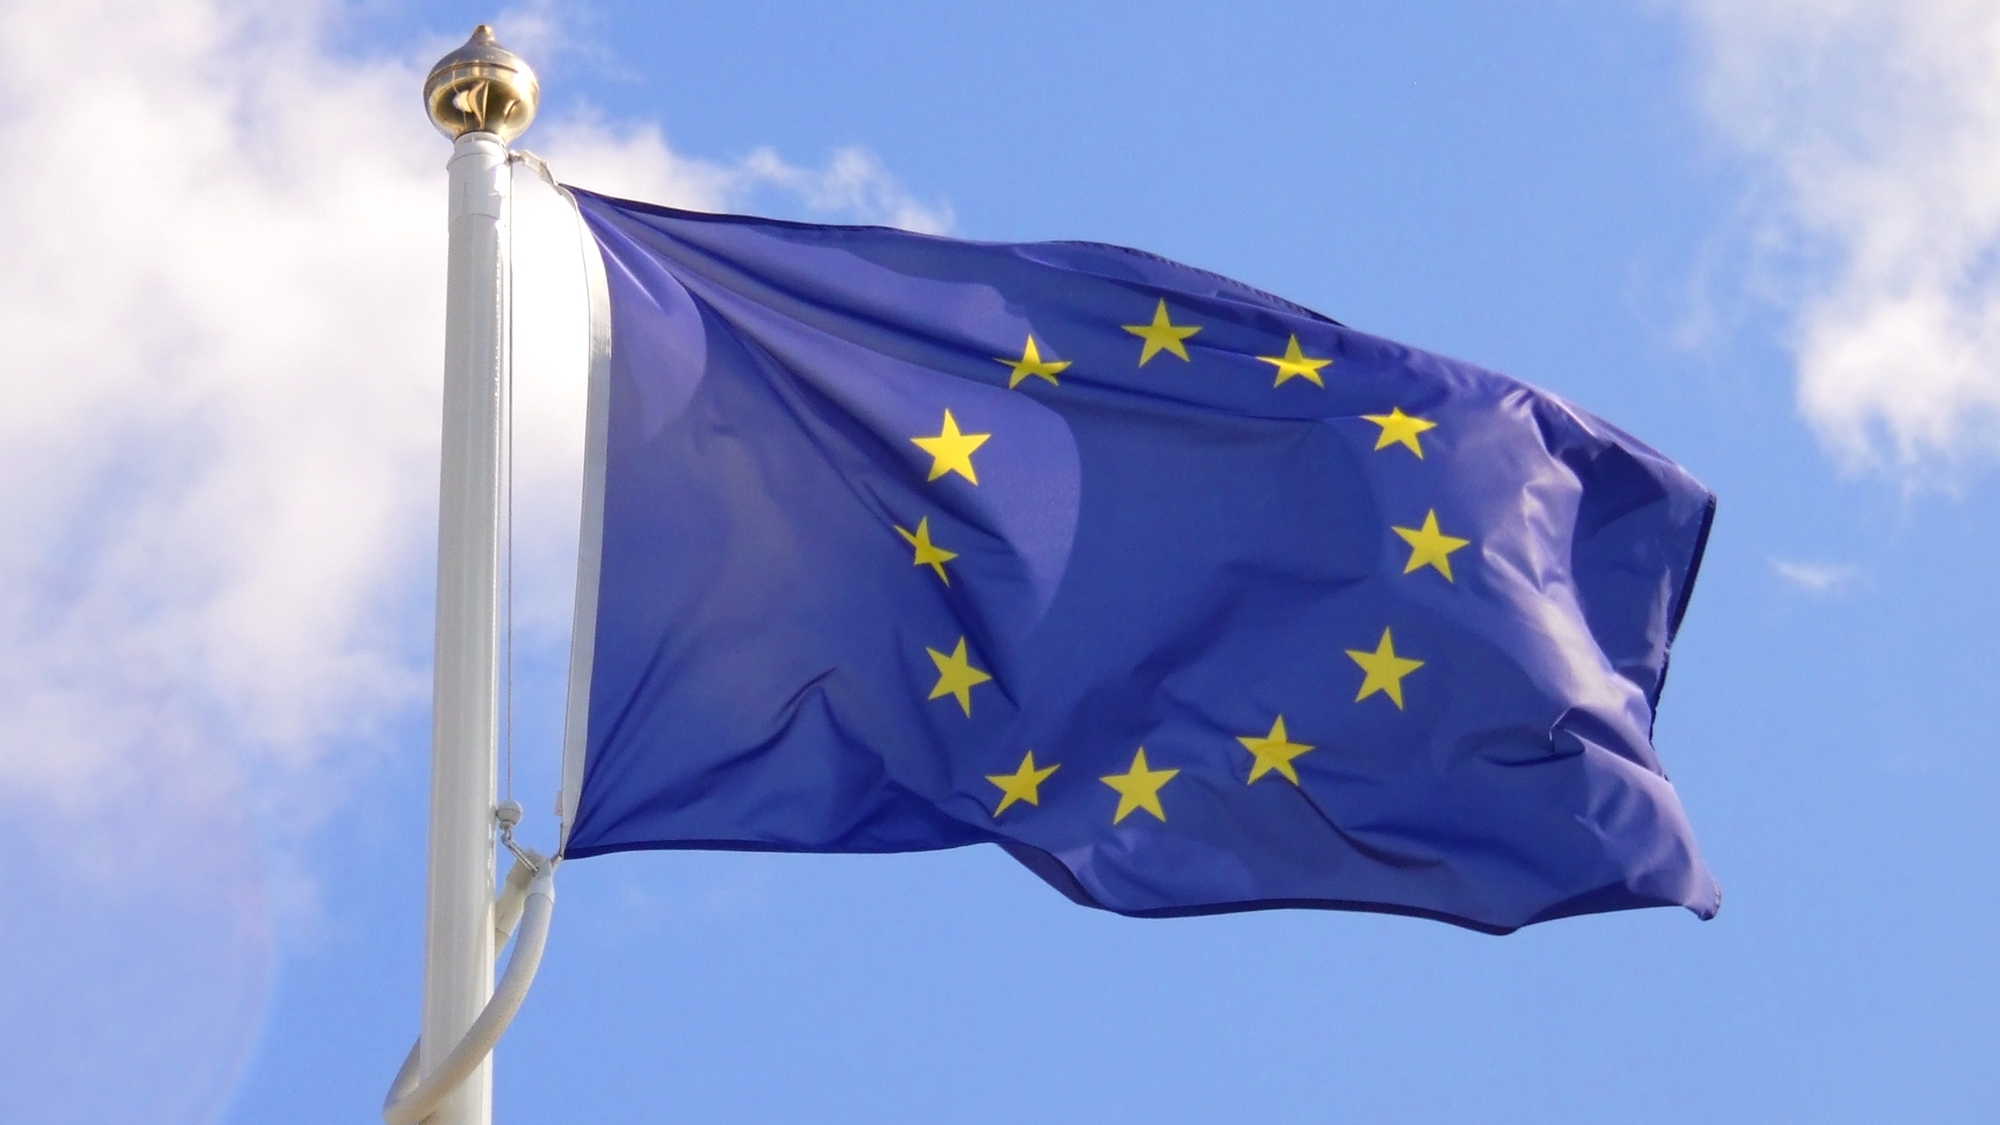 European Union flag waving against blue sky